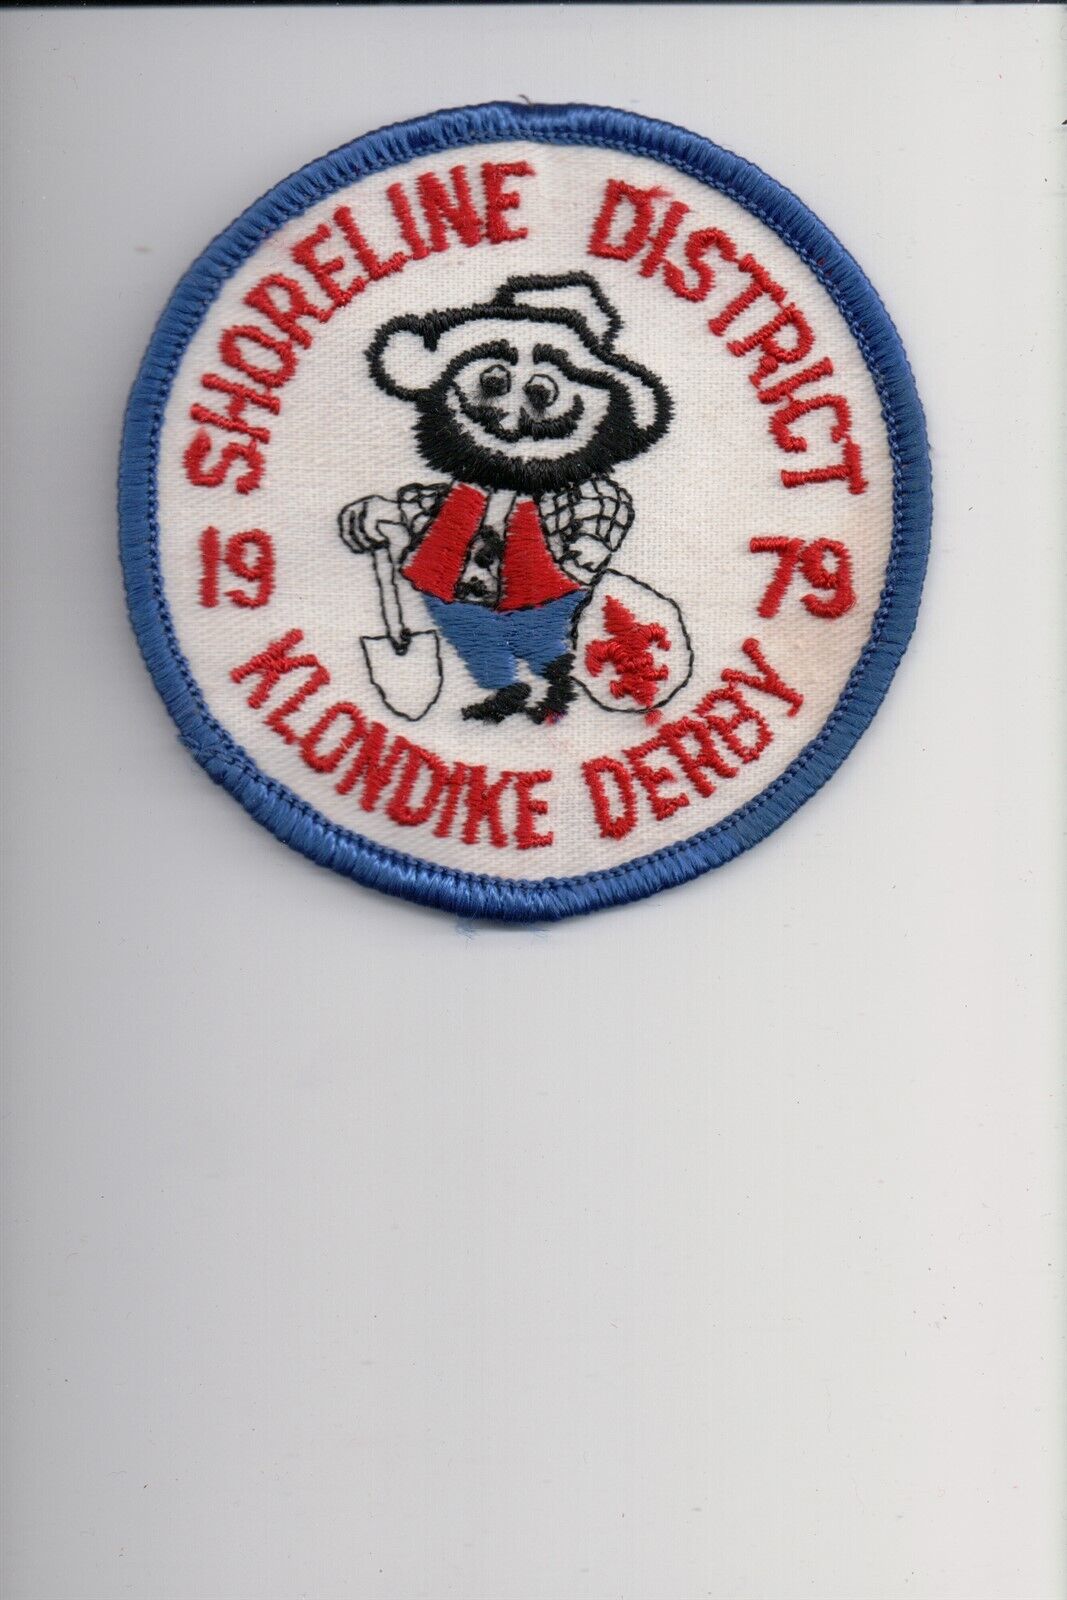 1979 Shoreline District Klondike Derby patch